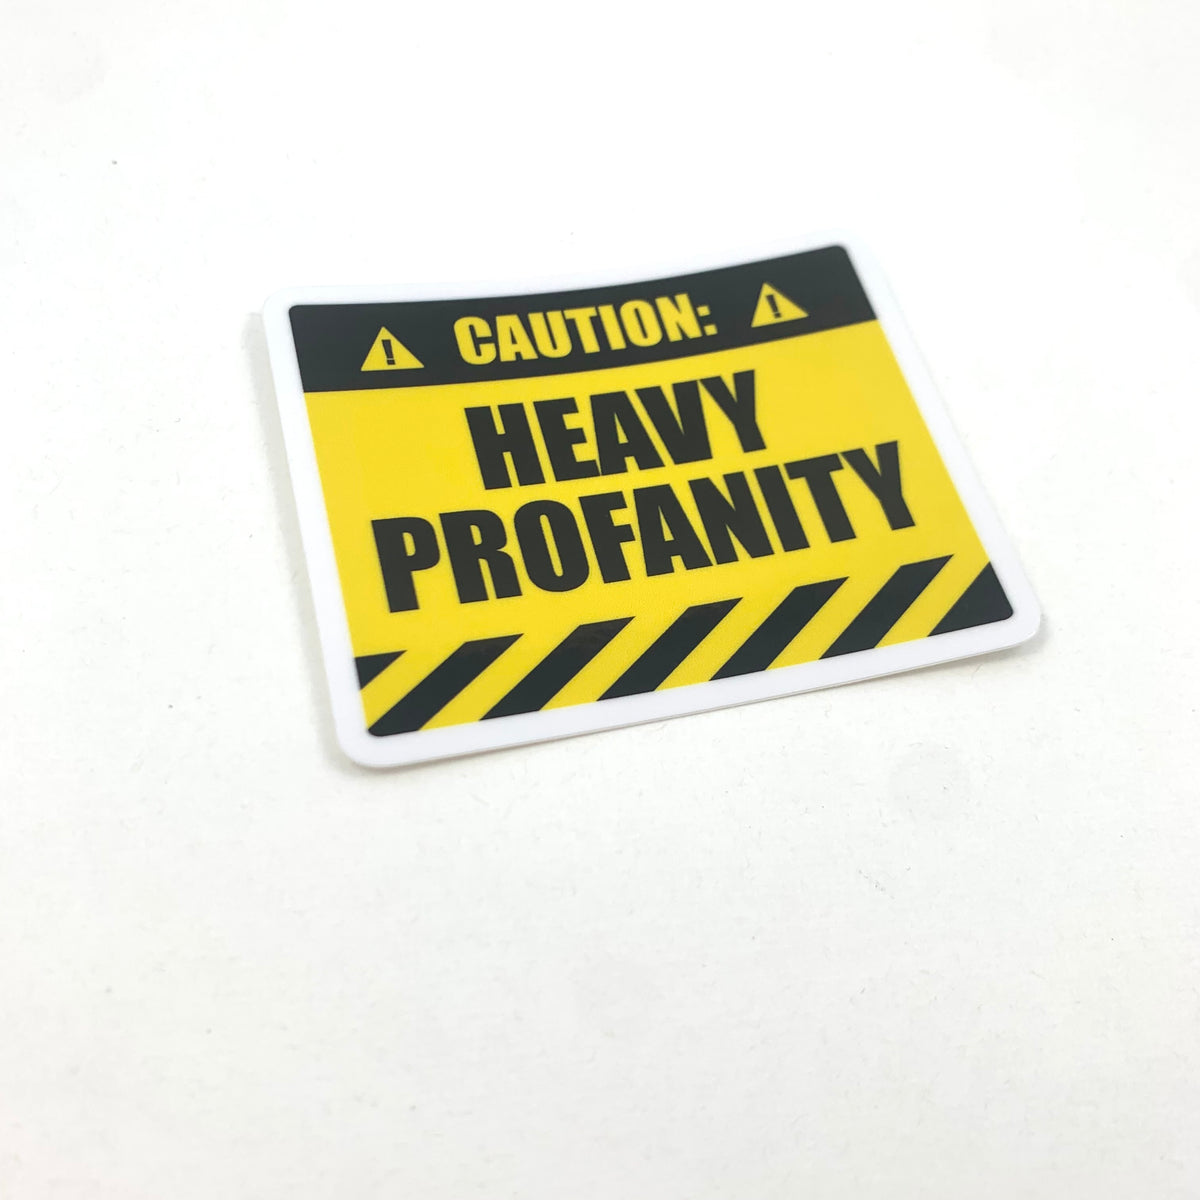 Vinyl Sticker Caution: Heavy Profanity